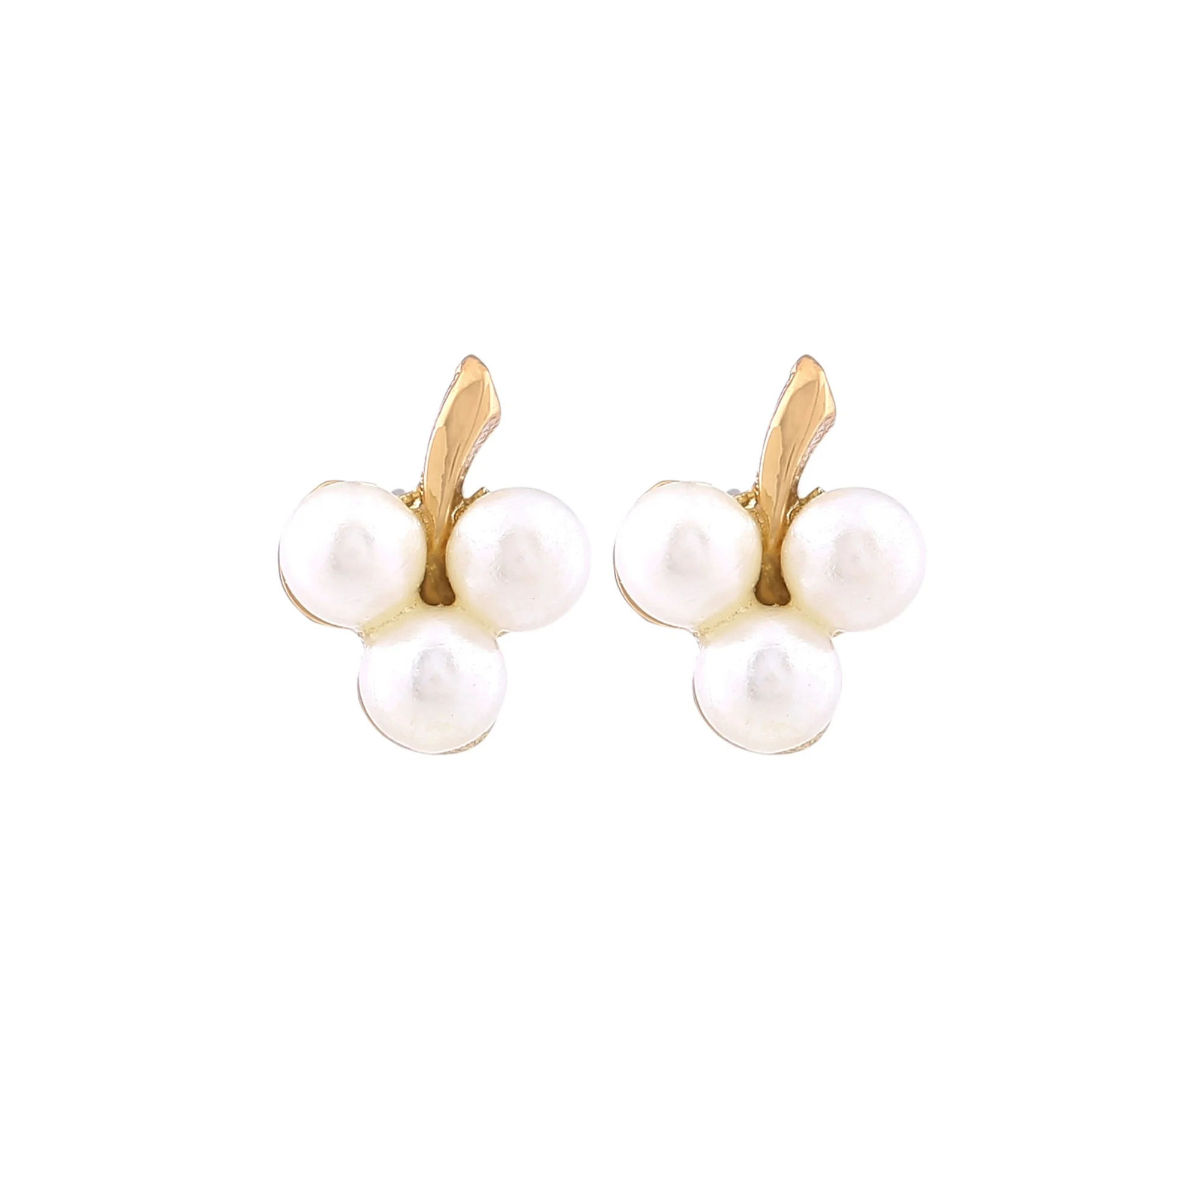 Buy Pearl Studs Online  Darpan Mangatrai Online  Mangatrai Pearls   Jewellers